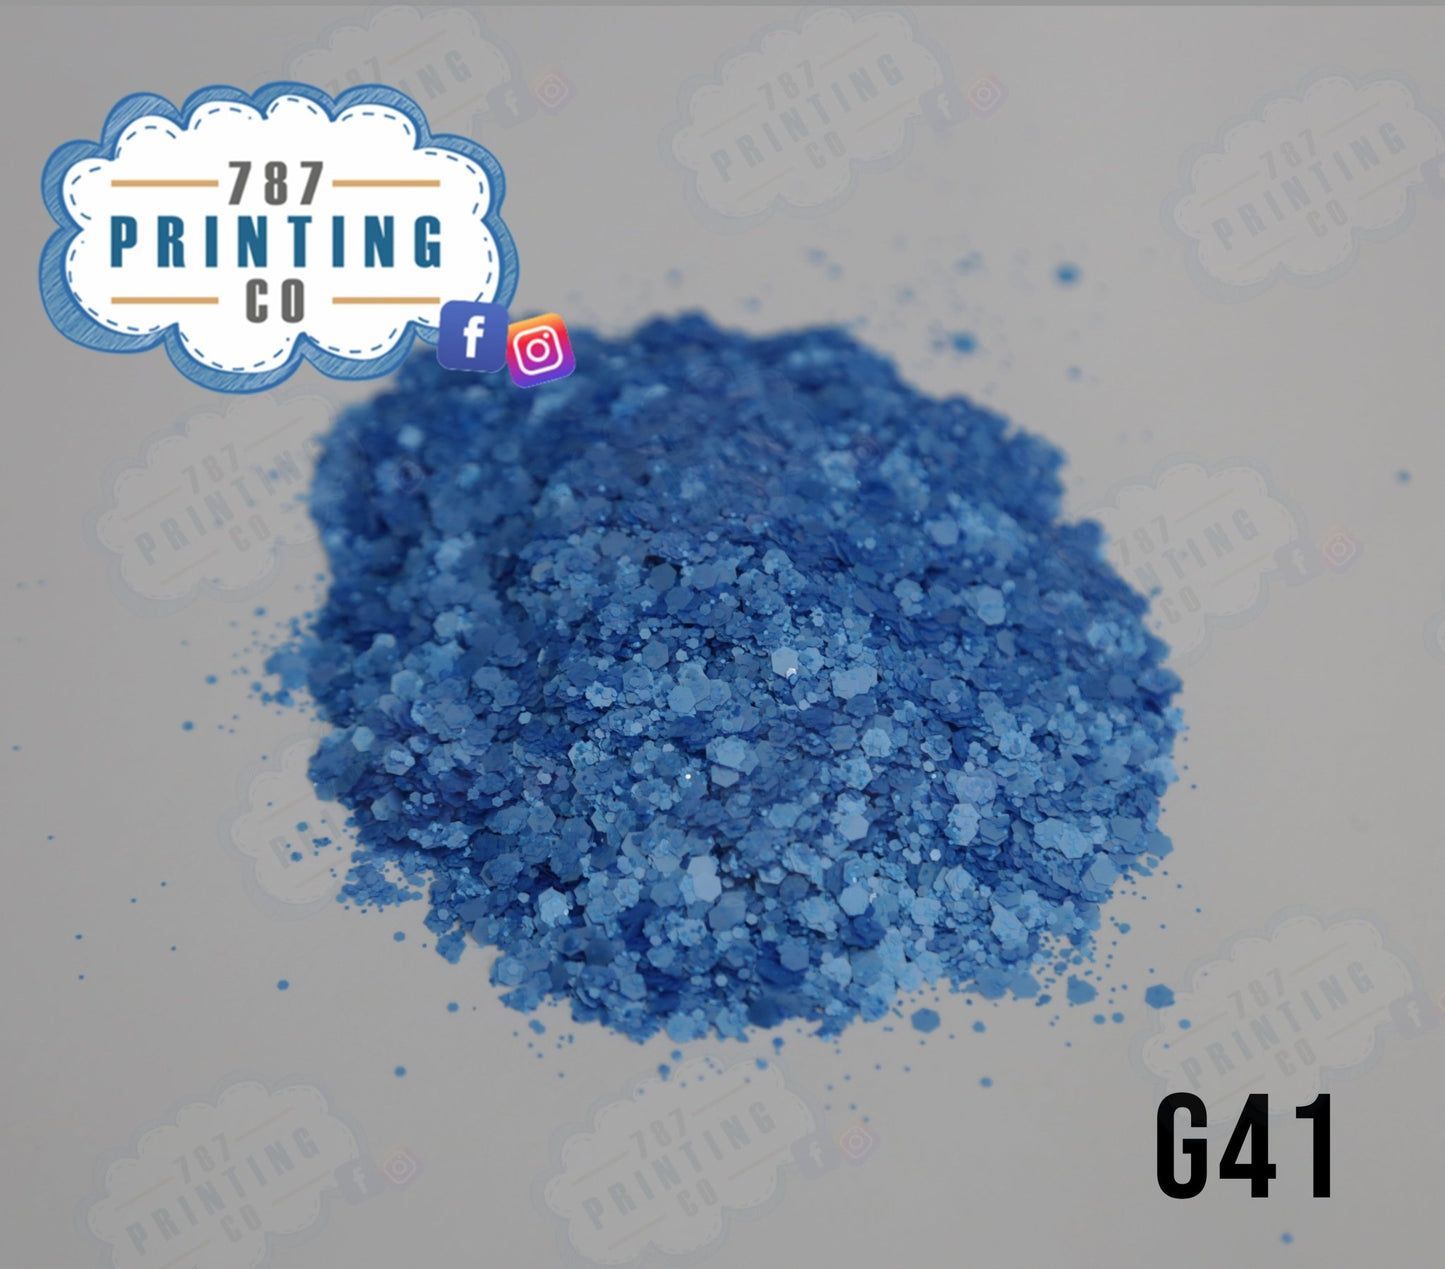 Jobos Mixed Chunky Glitter (G41) - 787 Printing Co.